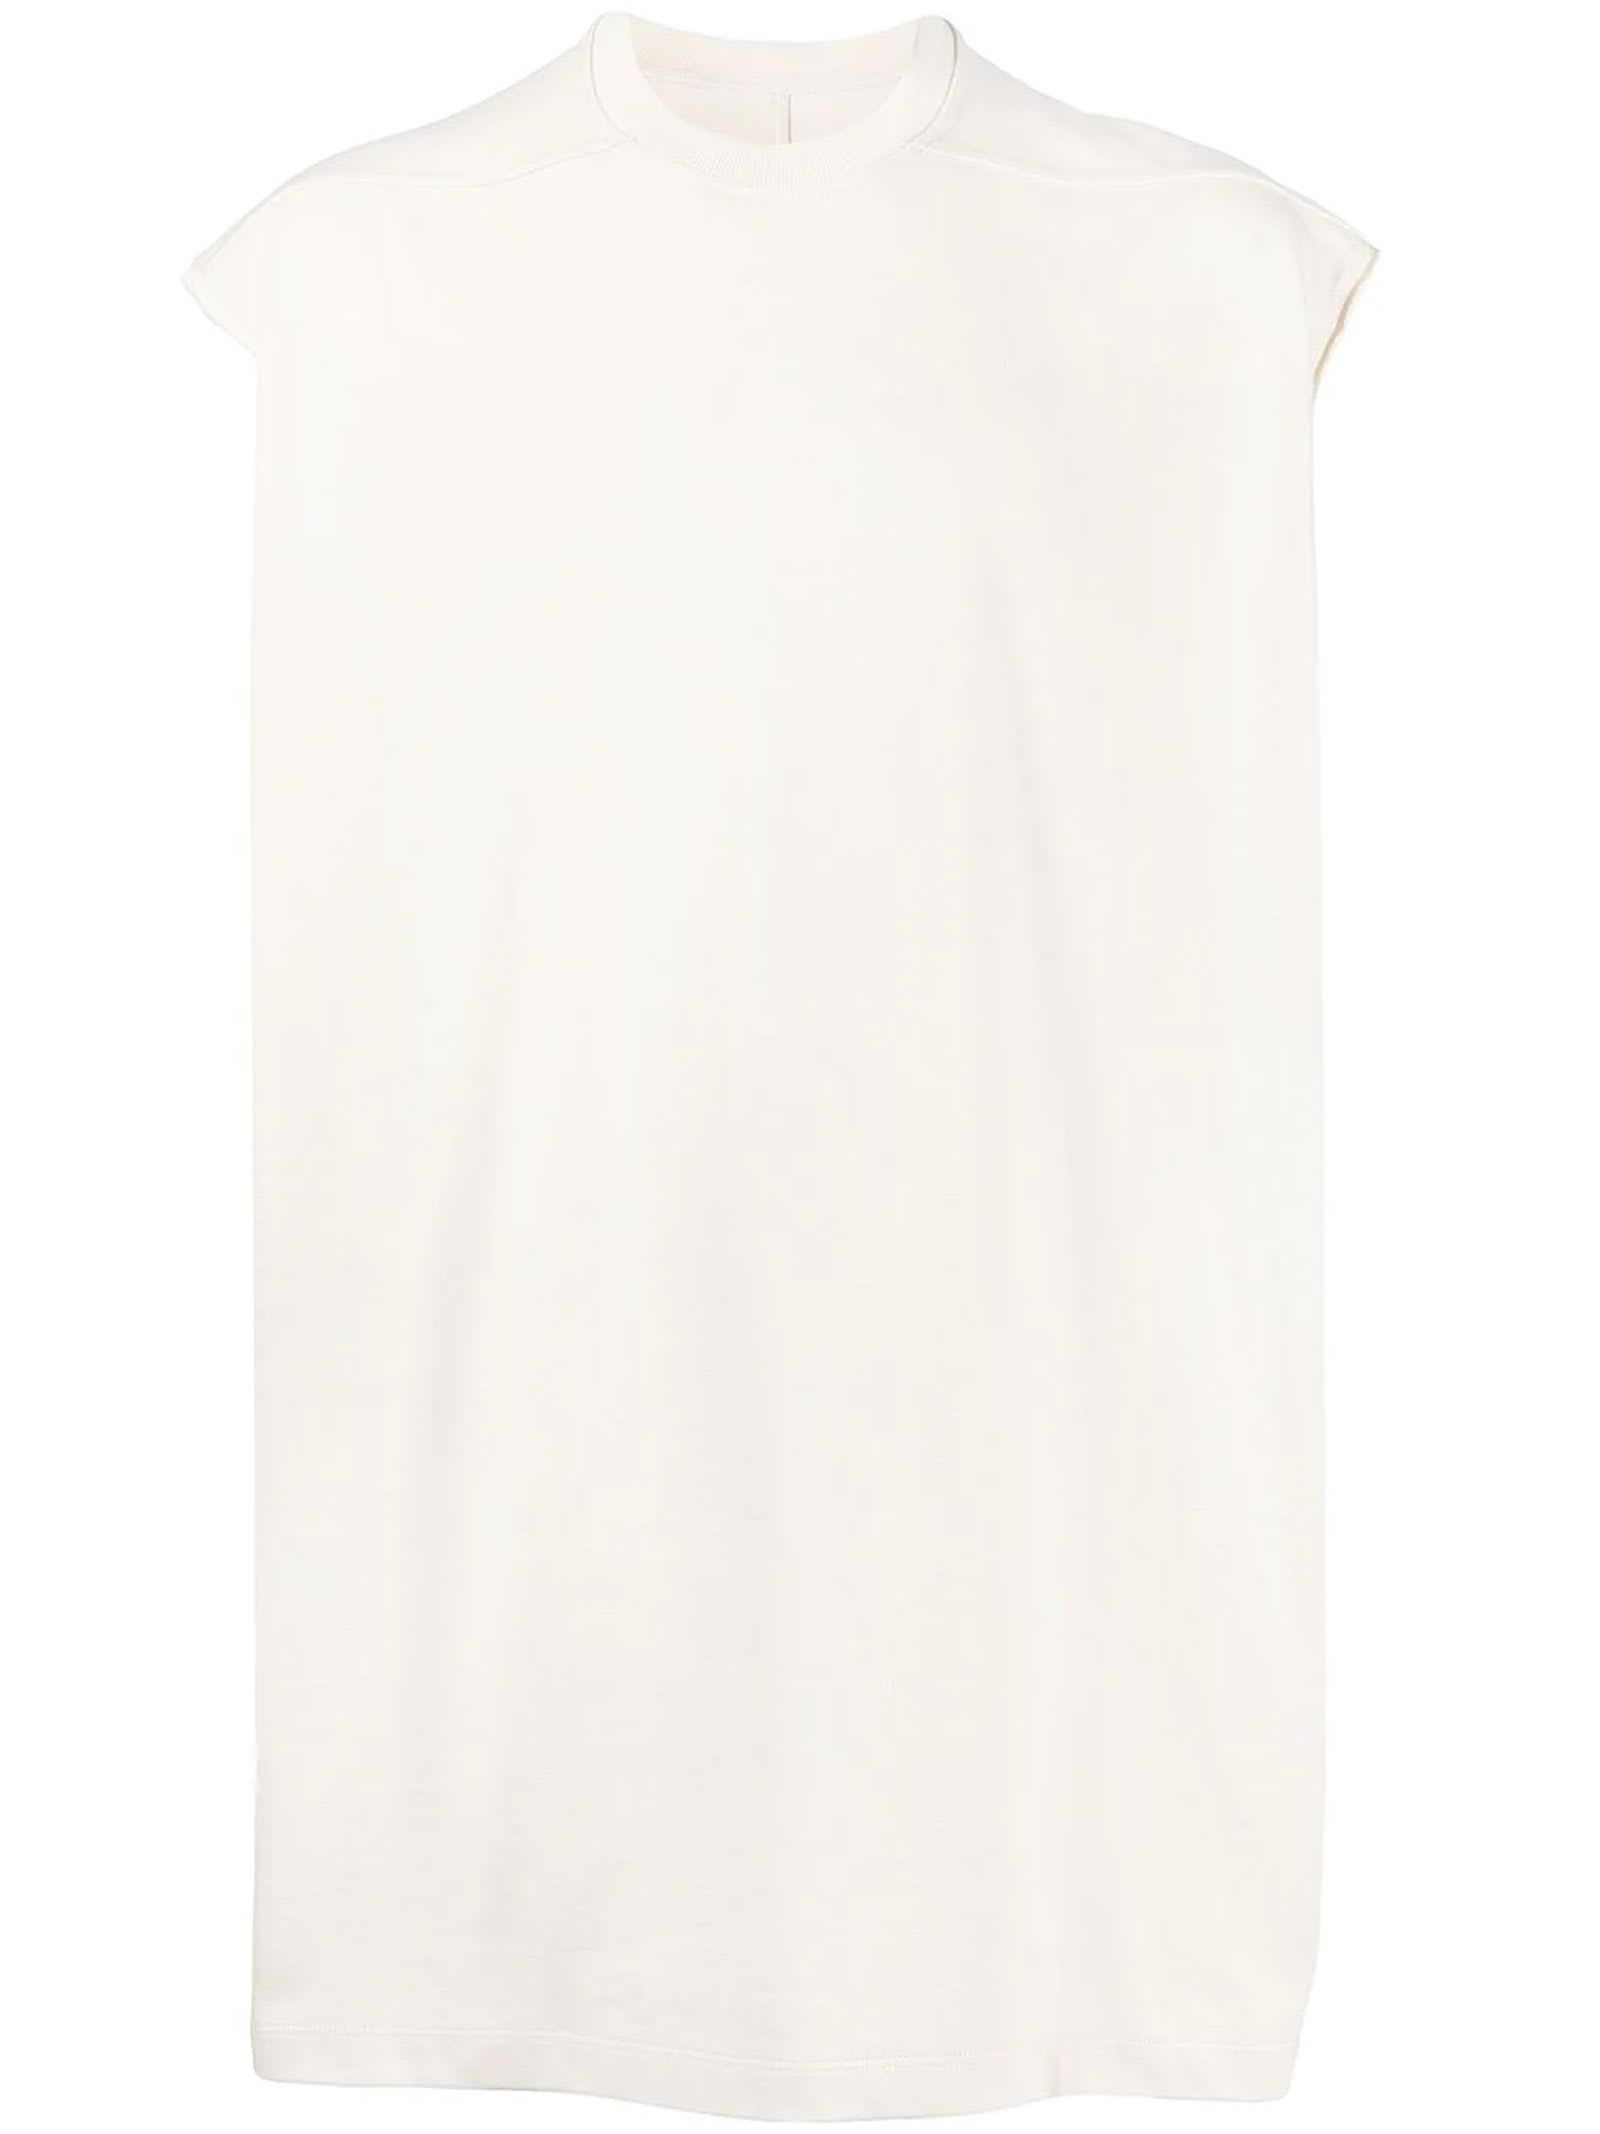 Rick Owens White Cotton T-shirt